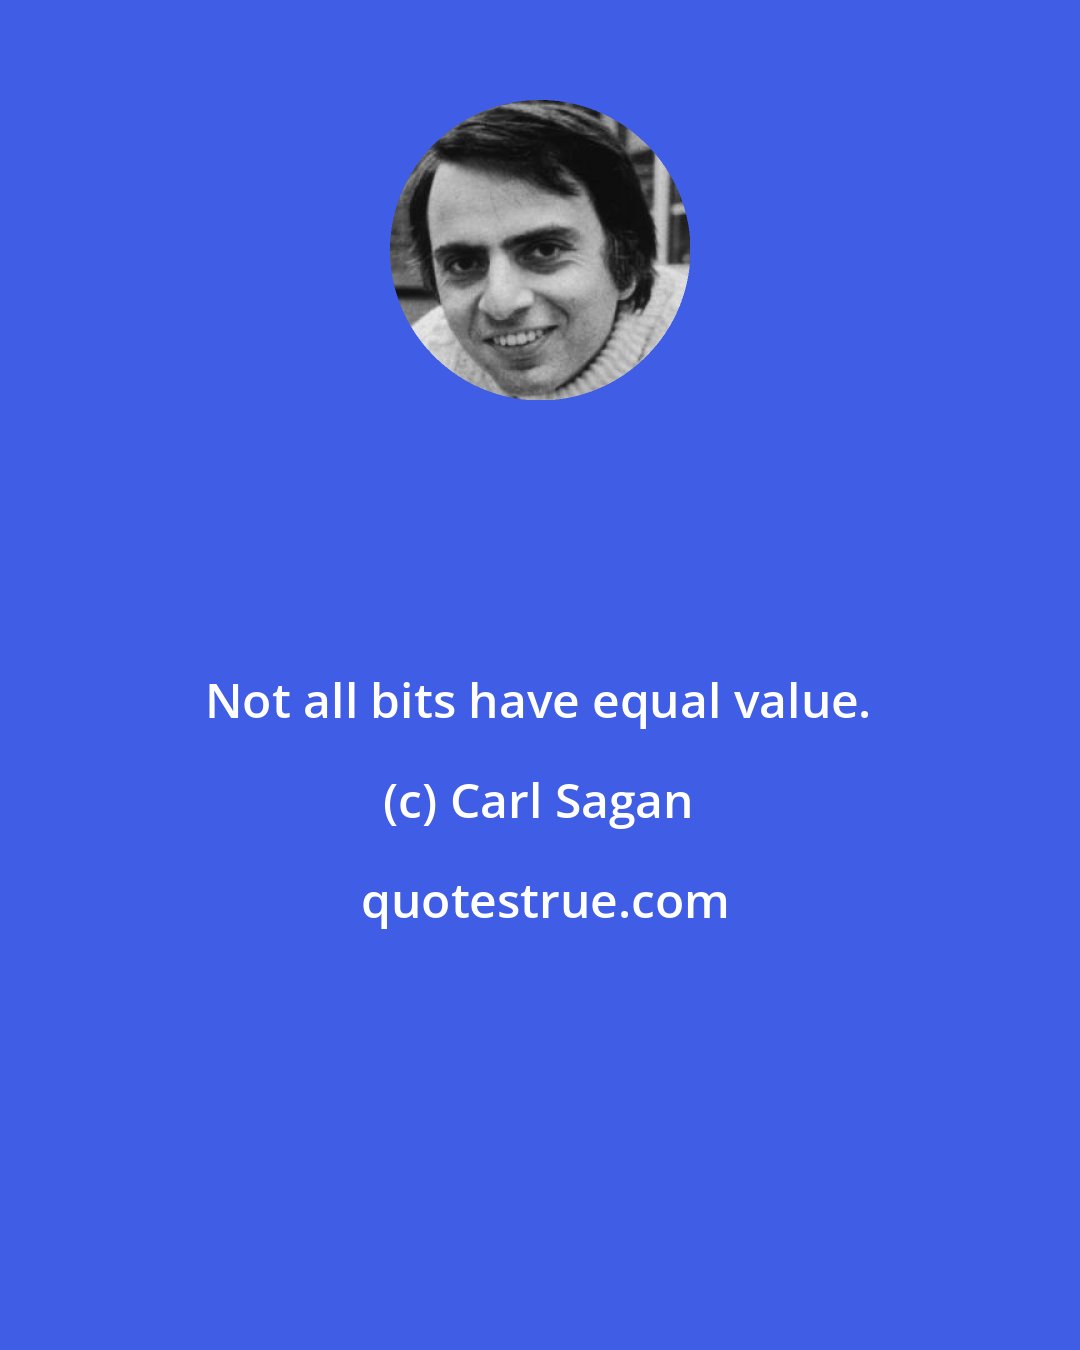 Carl Sagan: Not all bits have equal value.